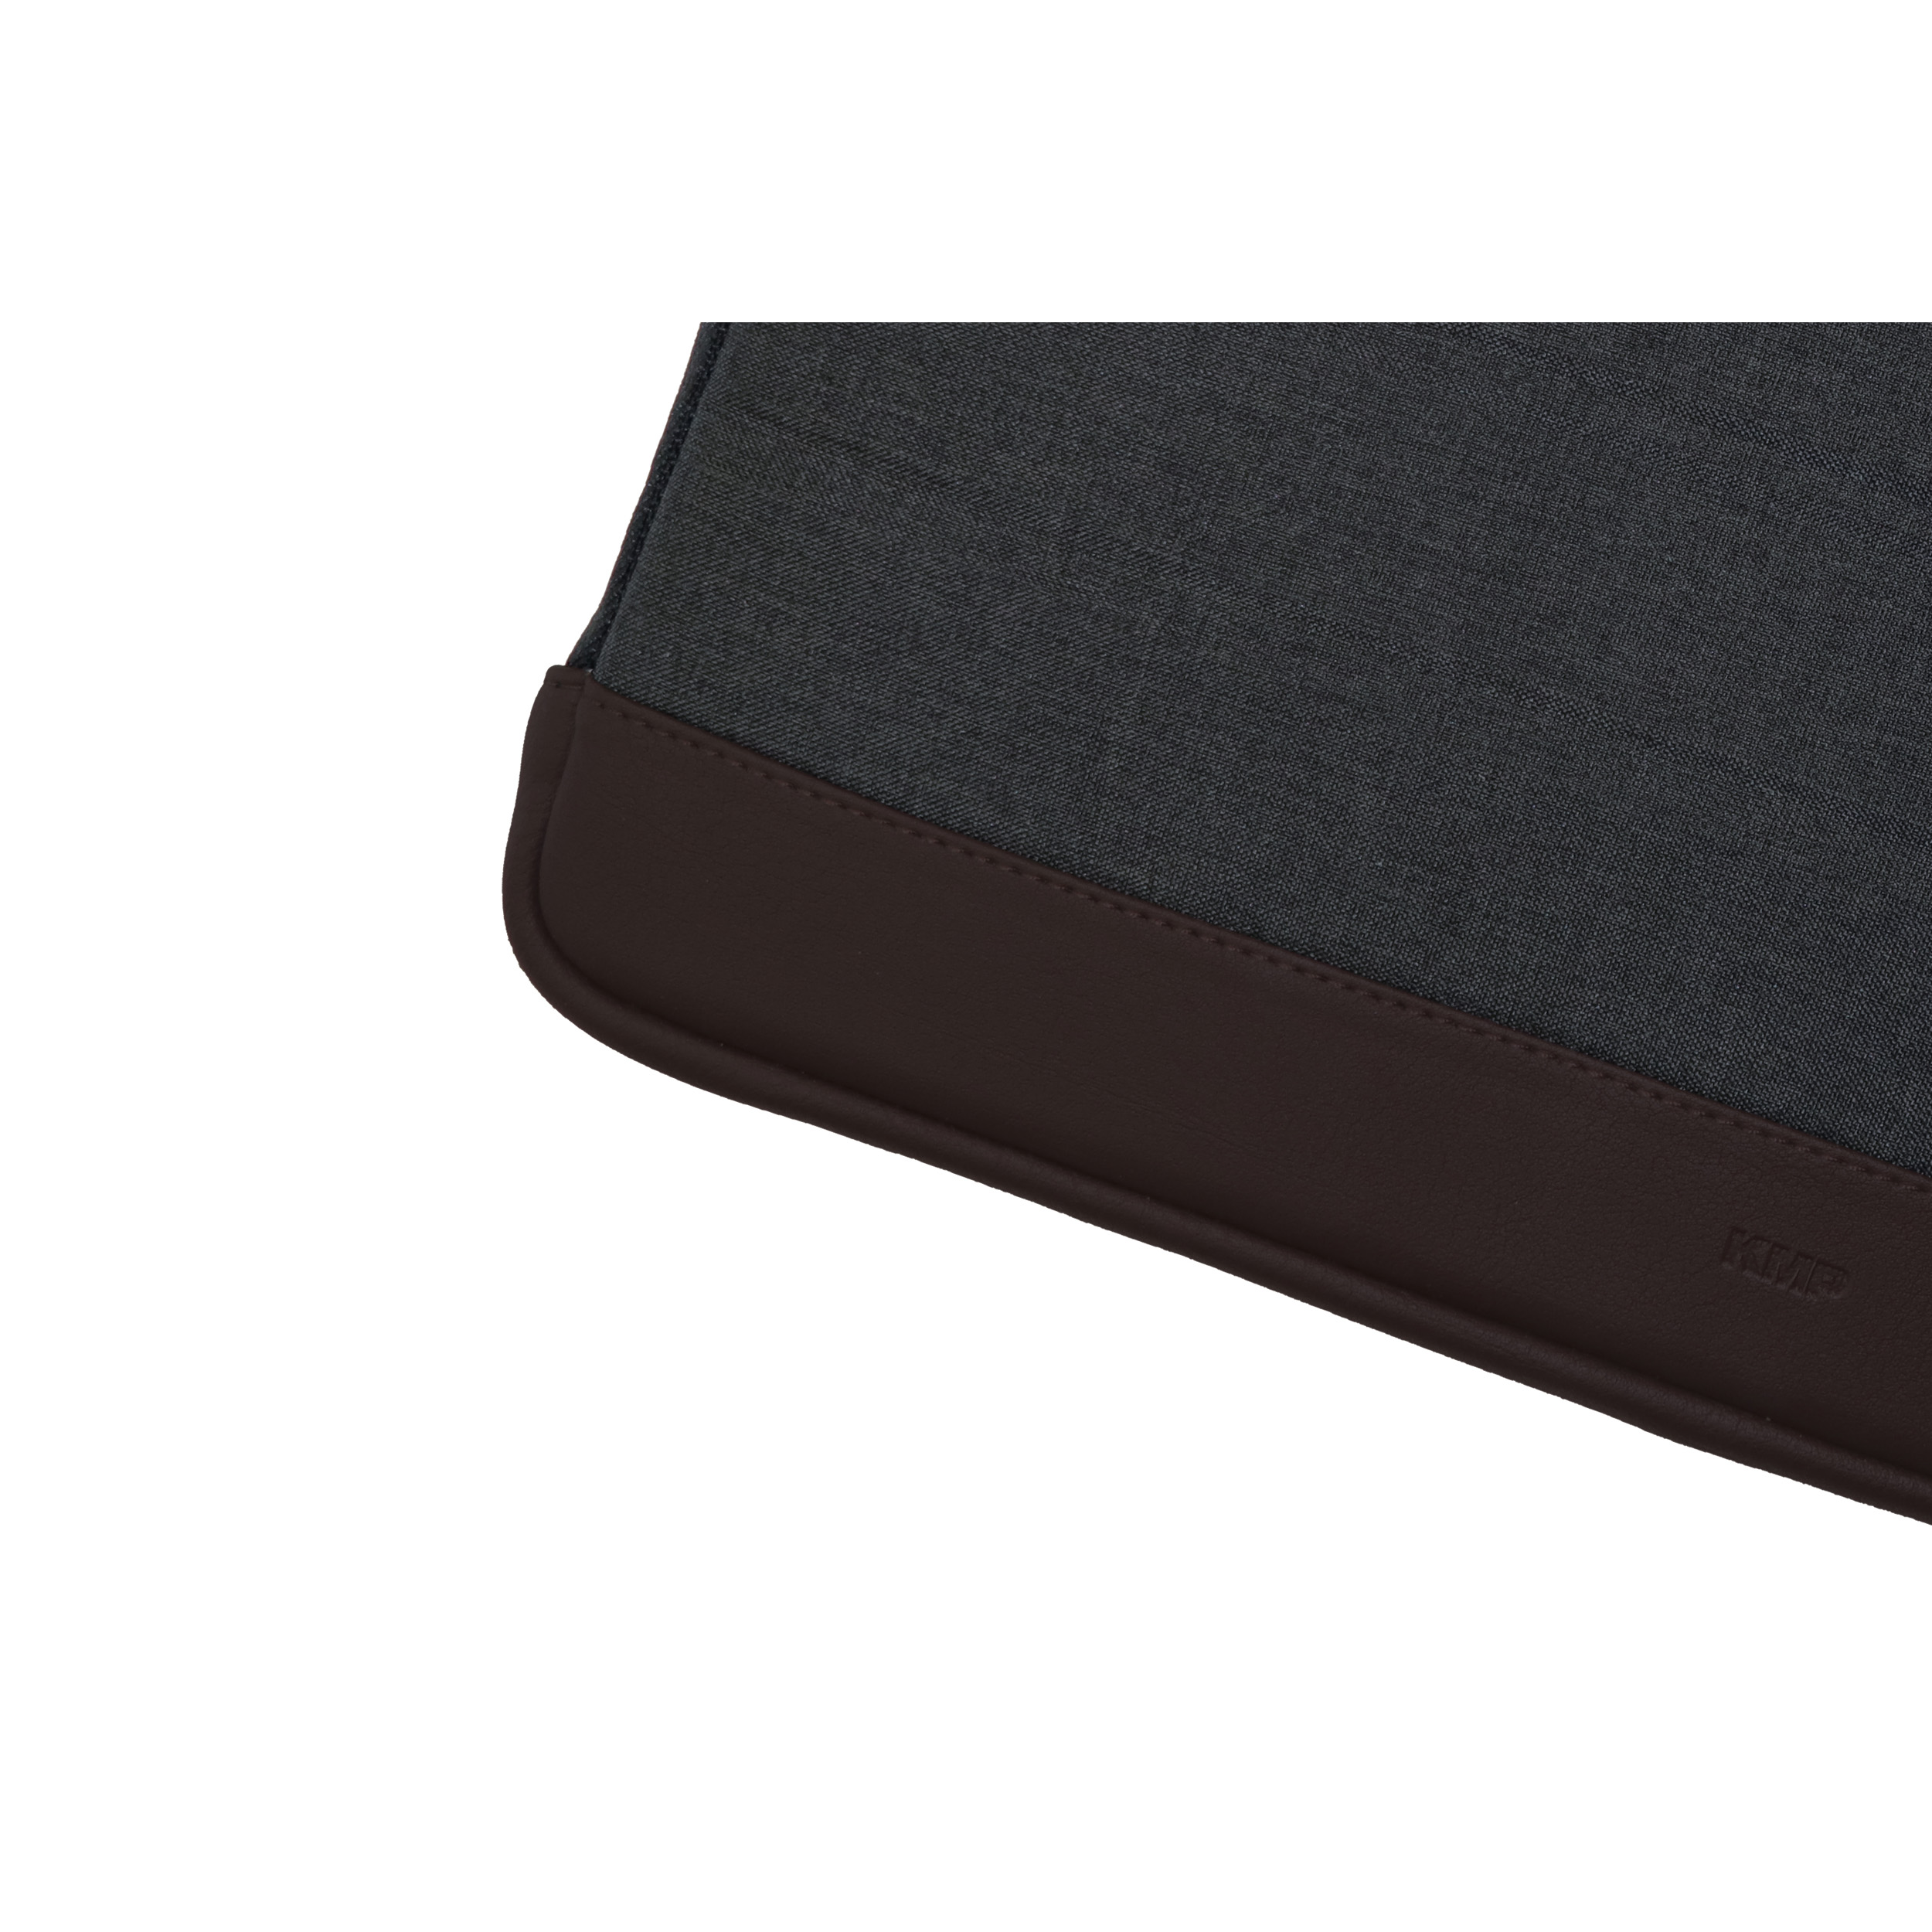 KMP Sleeve Sleeve Material pro für Notebook Anthracite/Brown / in Textil, MacBook anthracite Apple Lederoptik, biobasiertes brown 13 Sleeve für